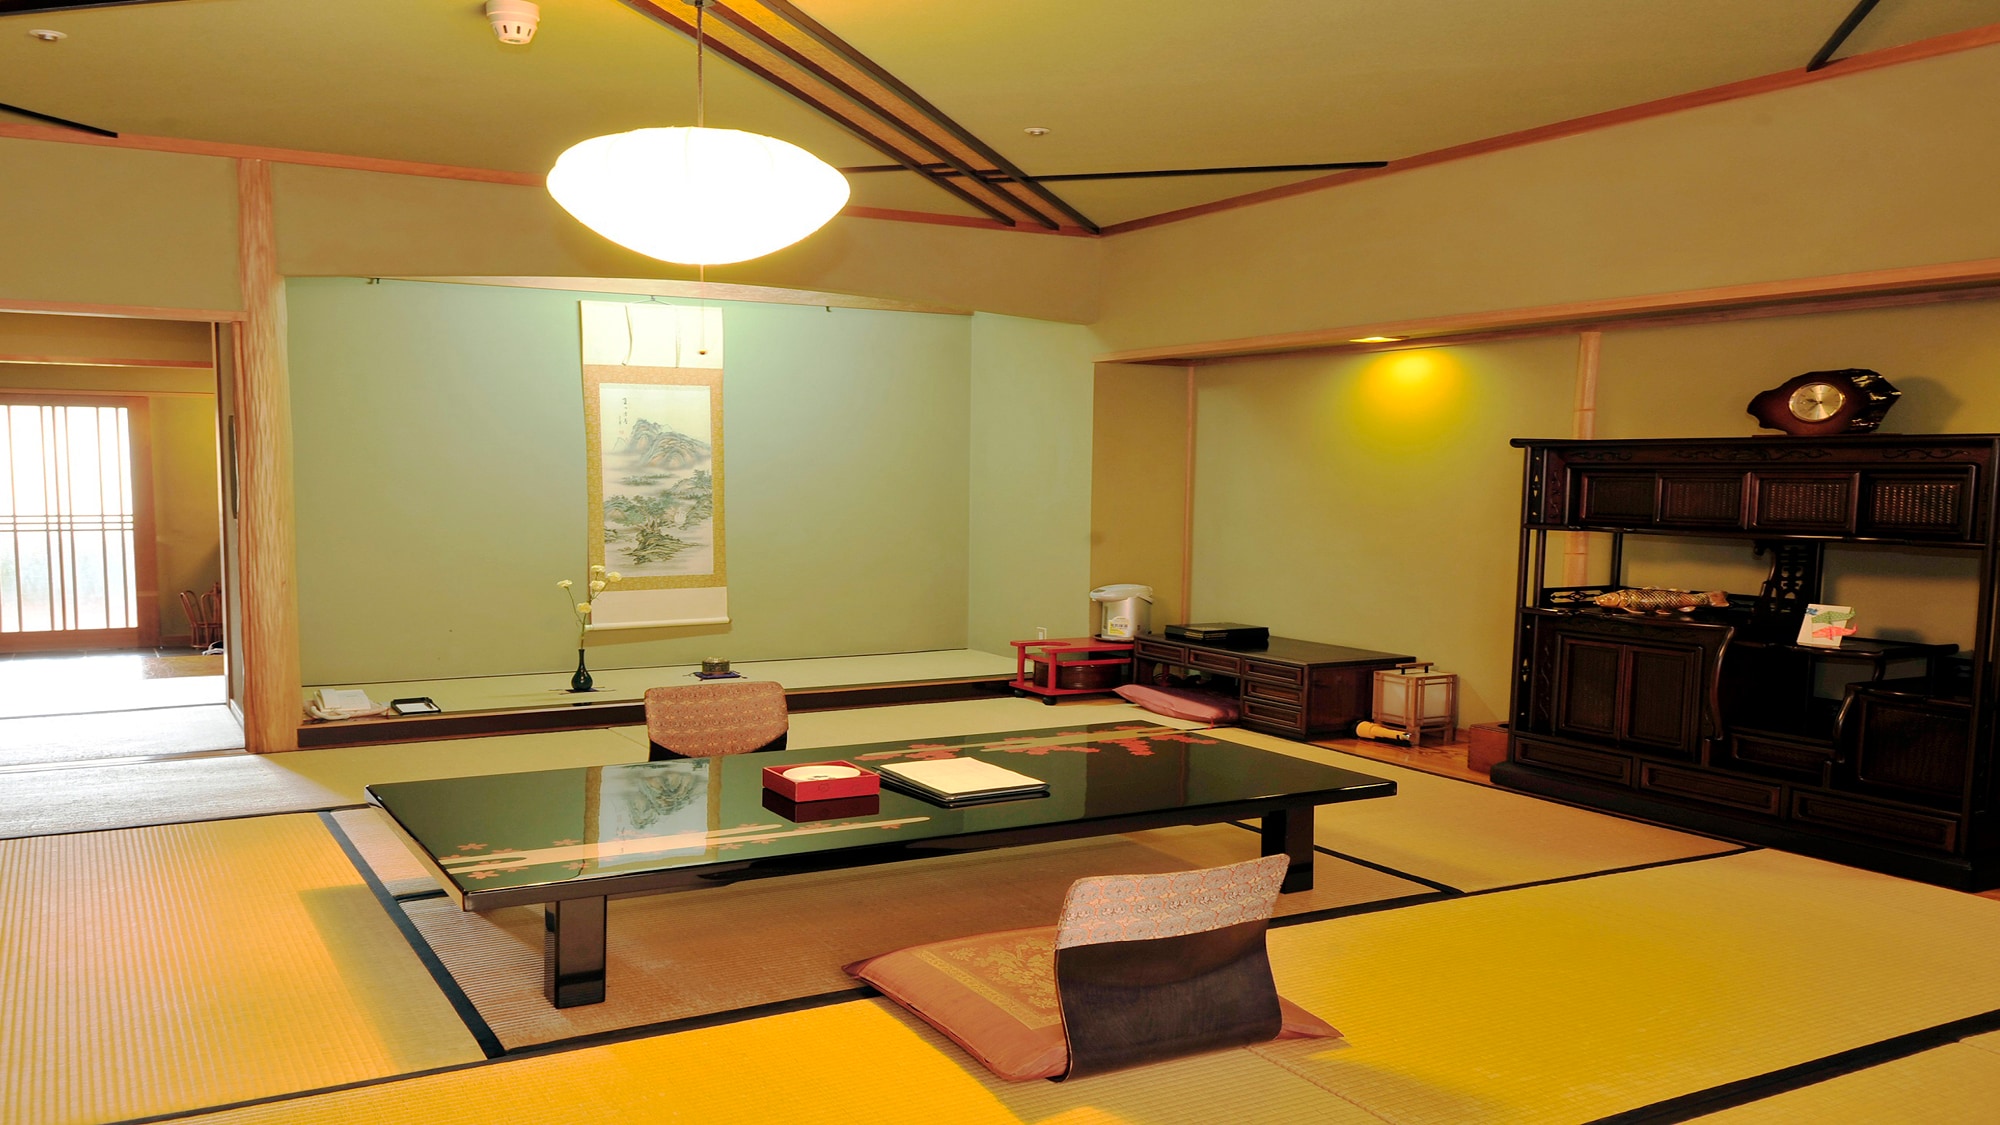 ◆ Japanese-style room 12.5 tatami mats + wide rim